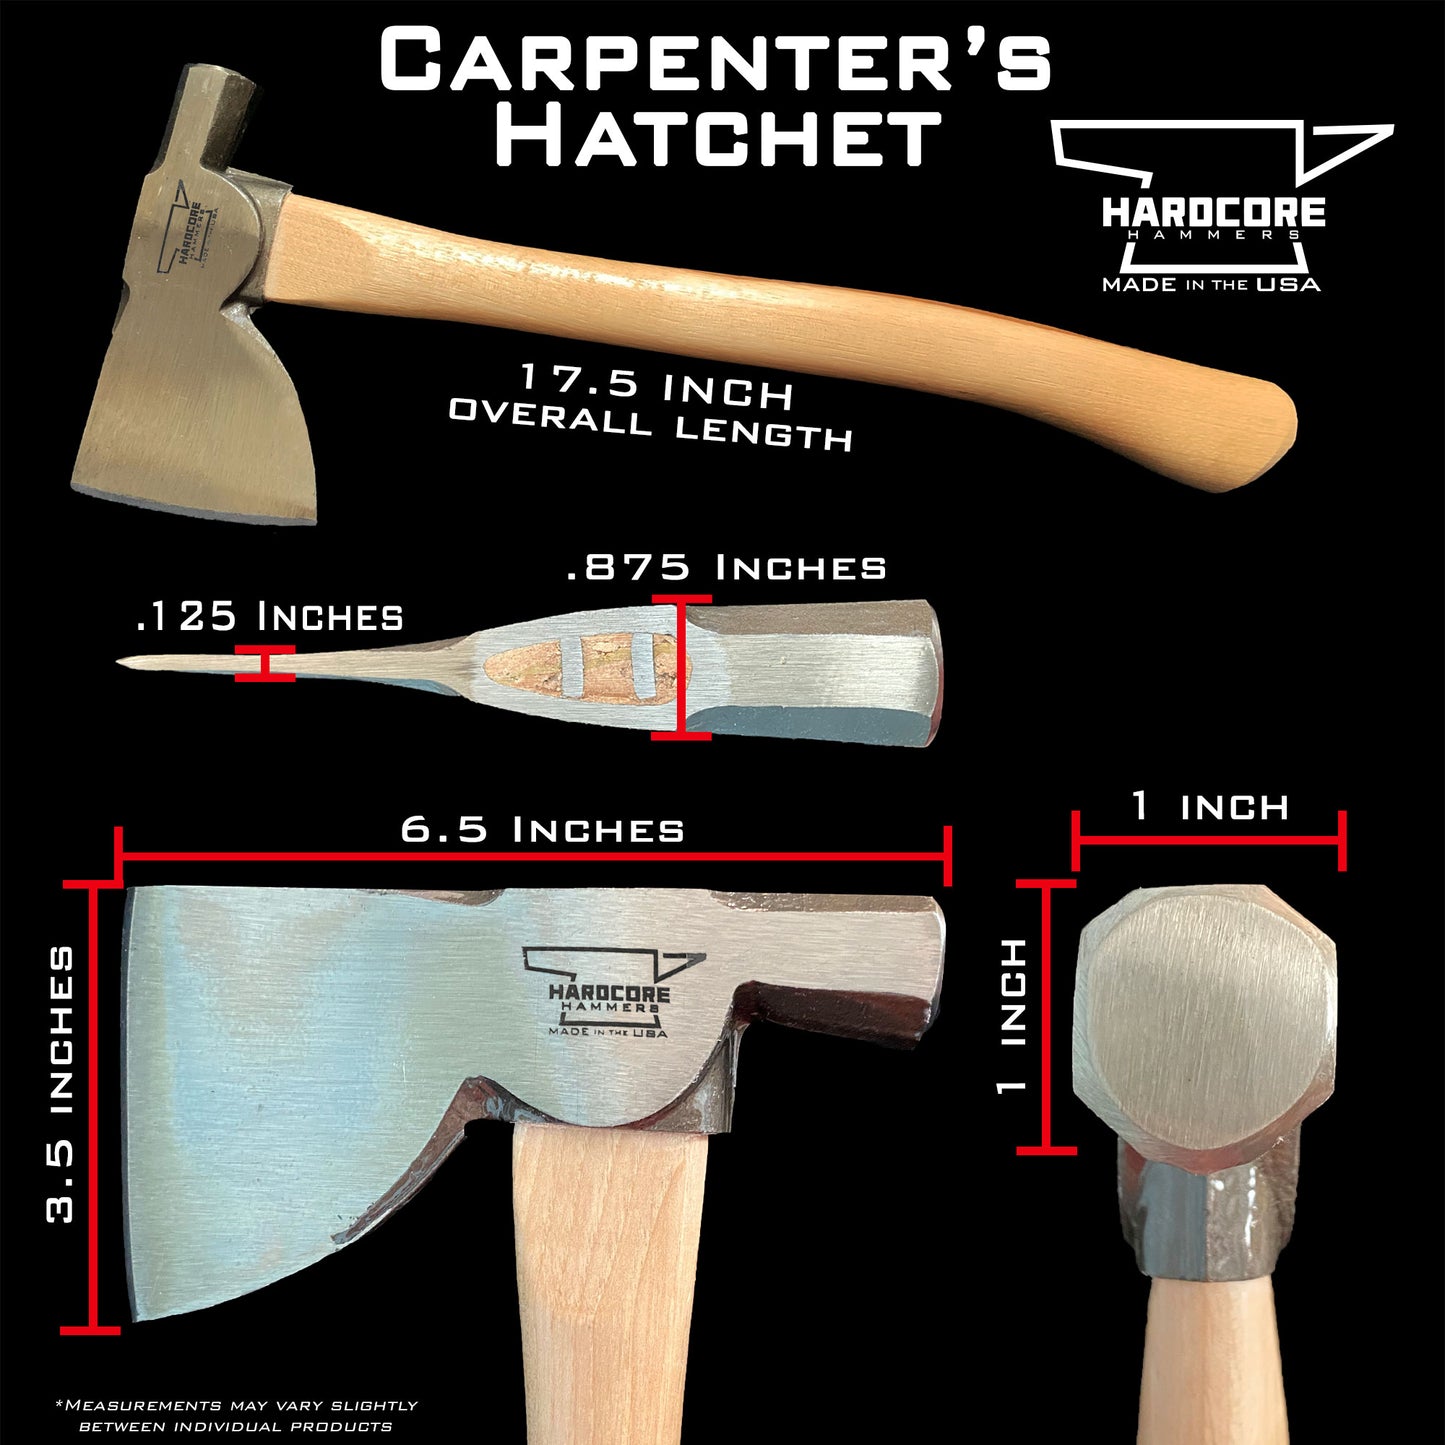 Carpenter's Hatchet 2.0